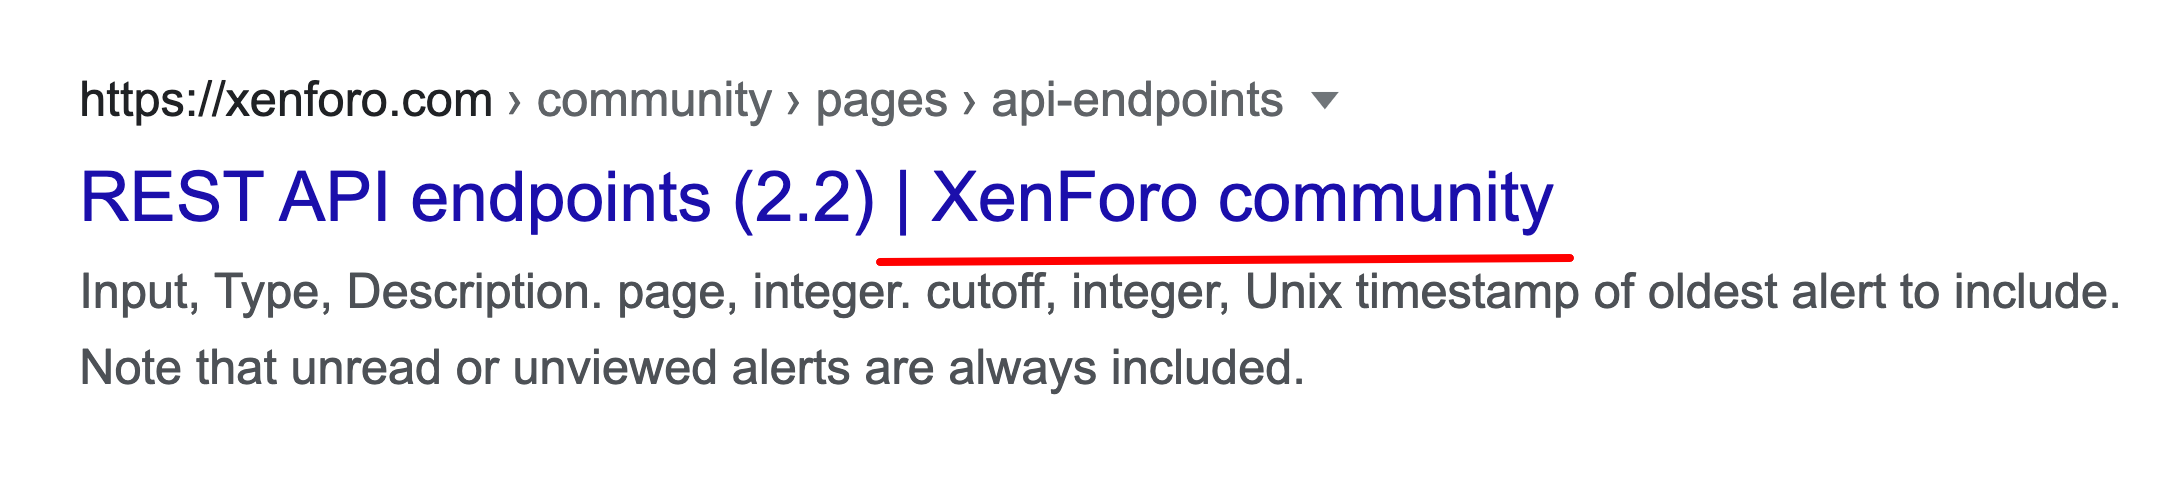 site-xenforo-com-Google-Search.png